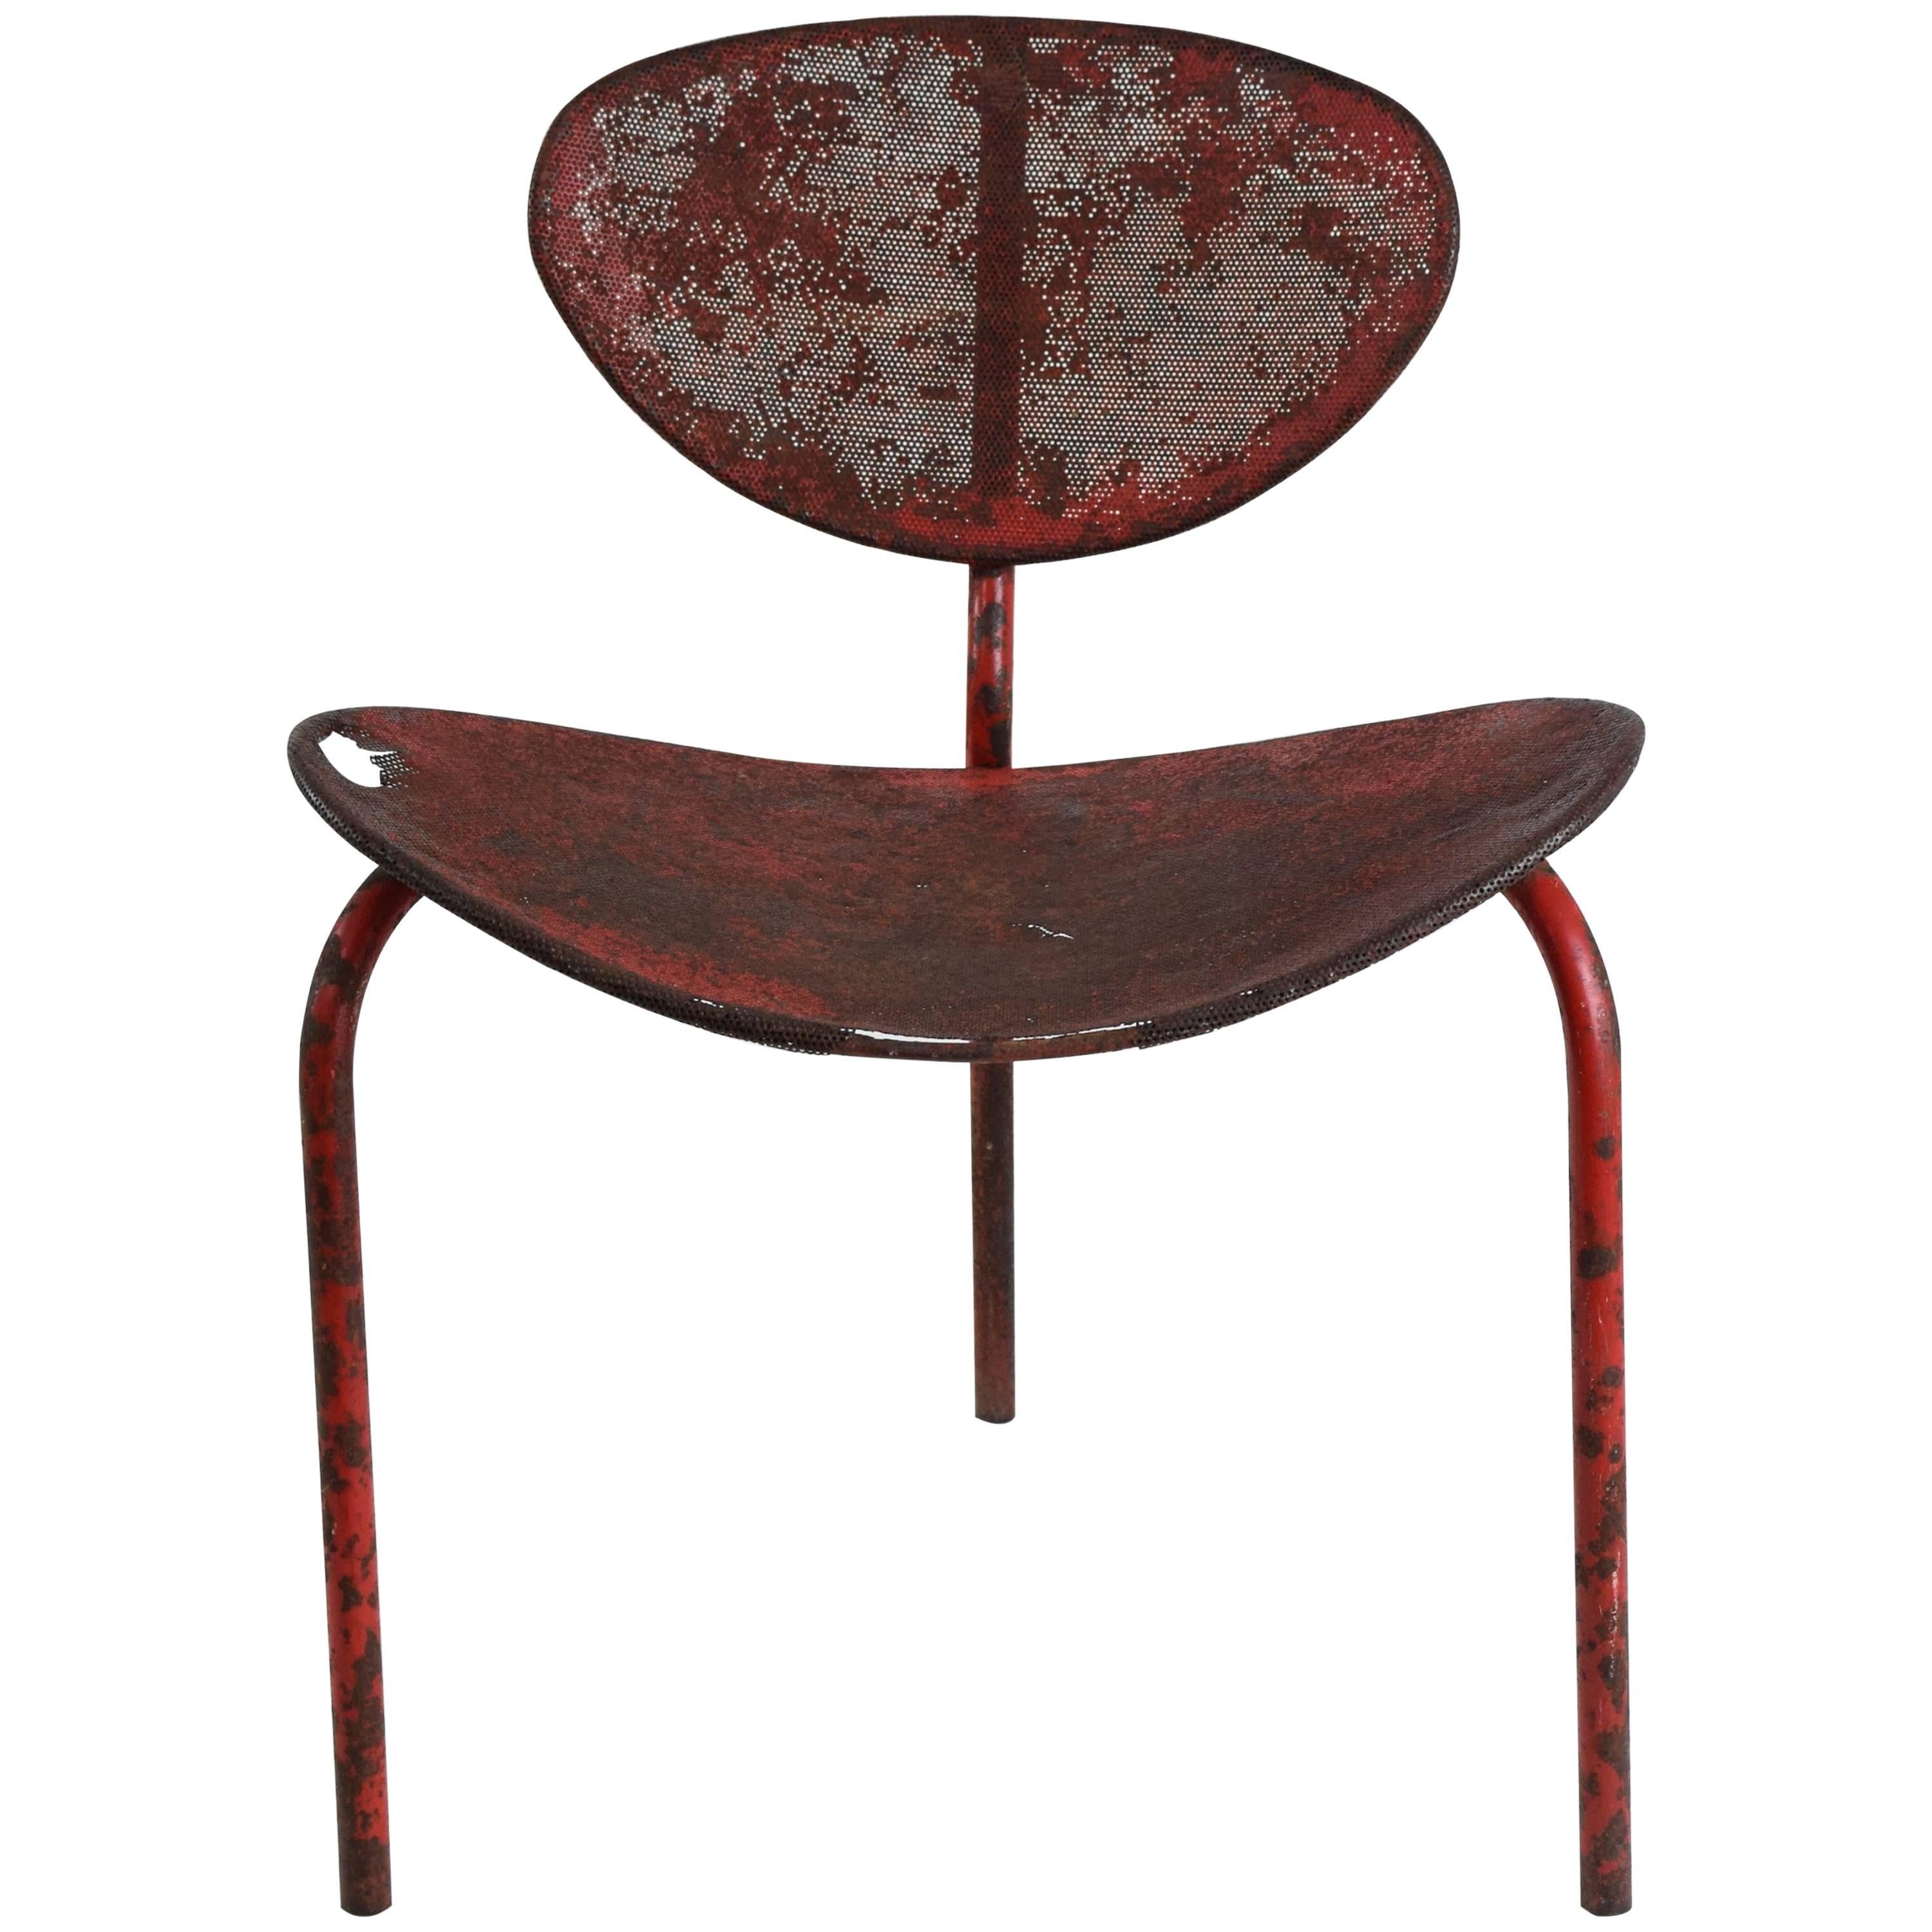 Original Edition Nagasaki Chair by Mathieu Matégot For Sale